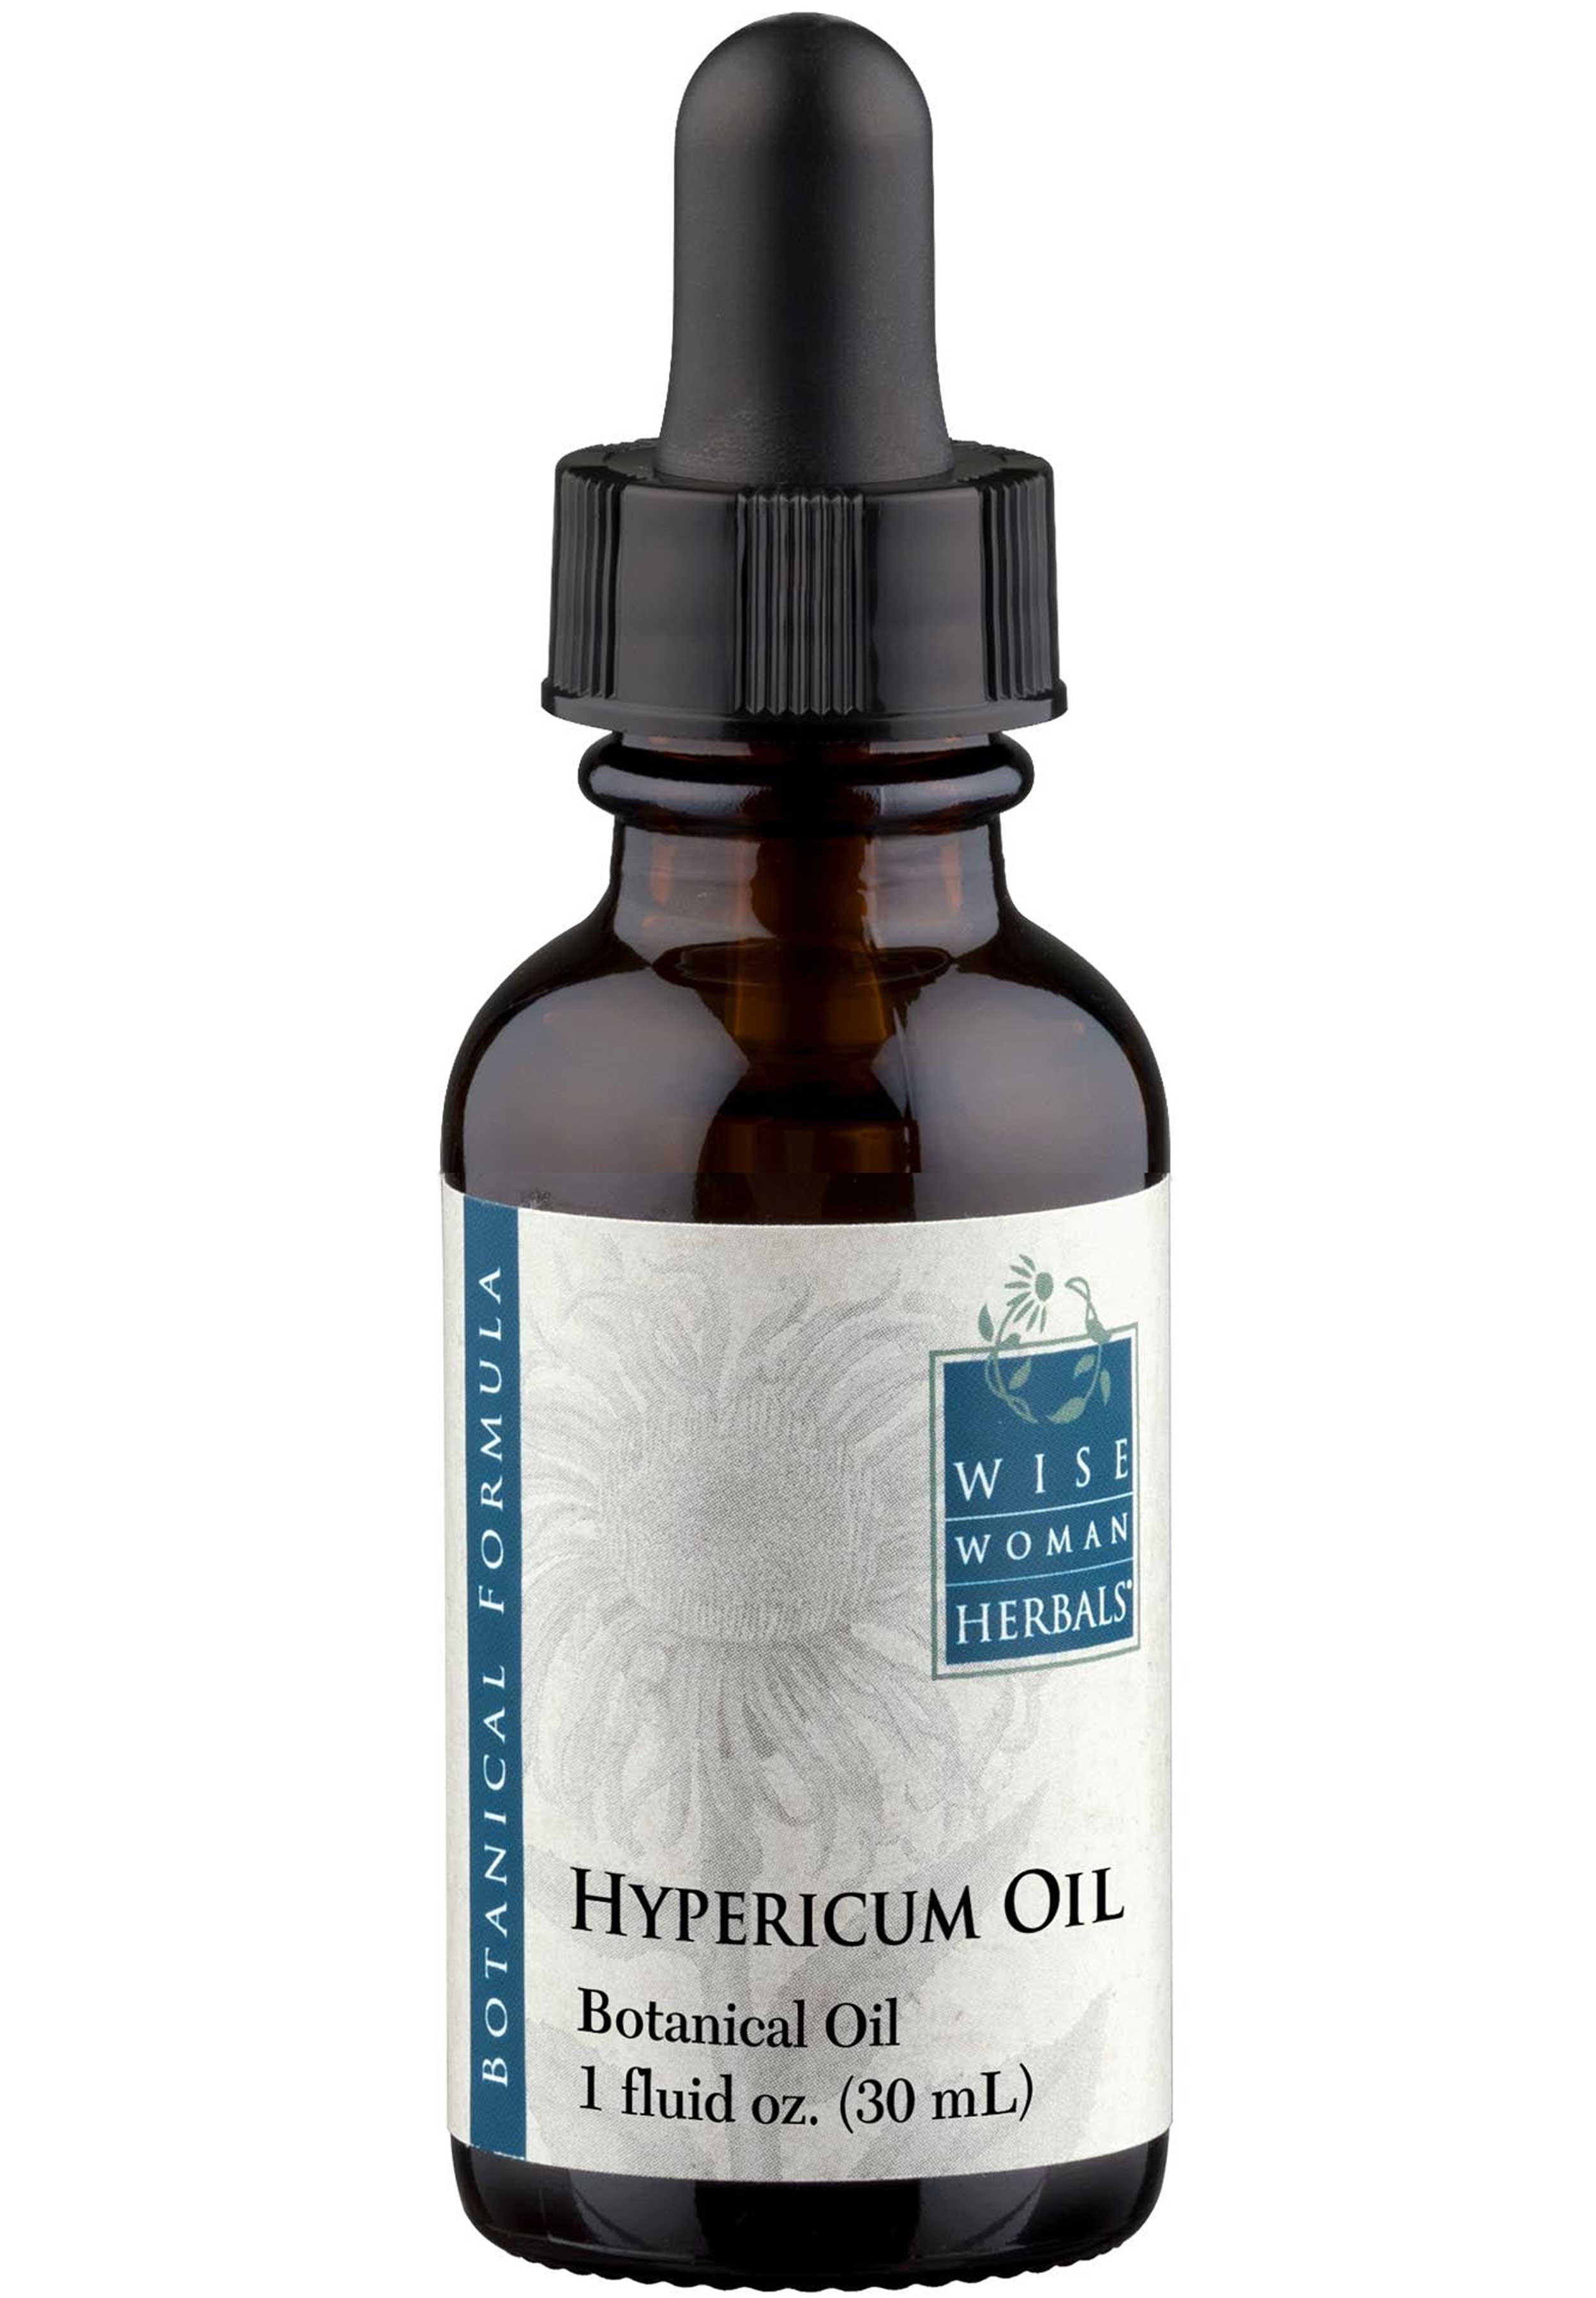 Wise Woman Herbals Hypericum Oil (St. John's wort)